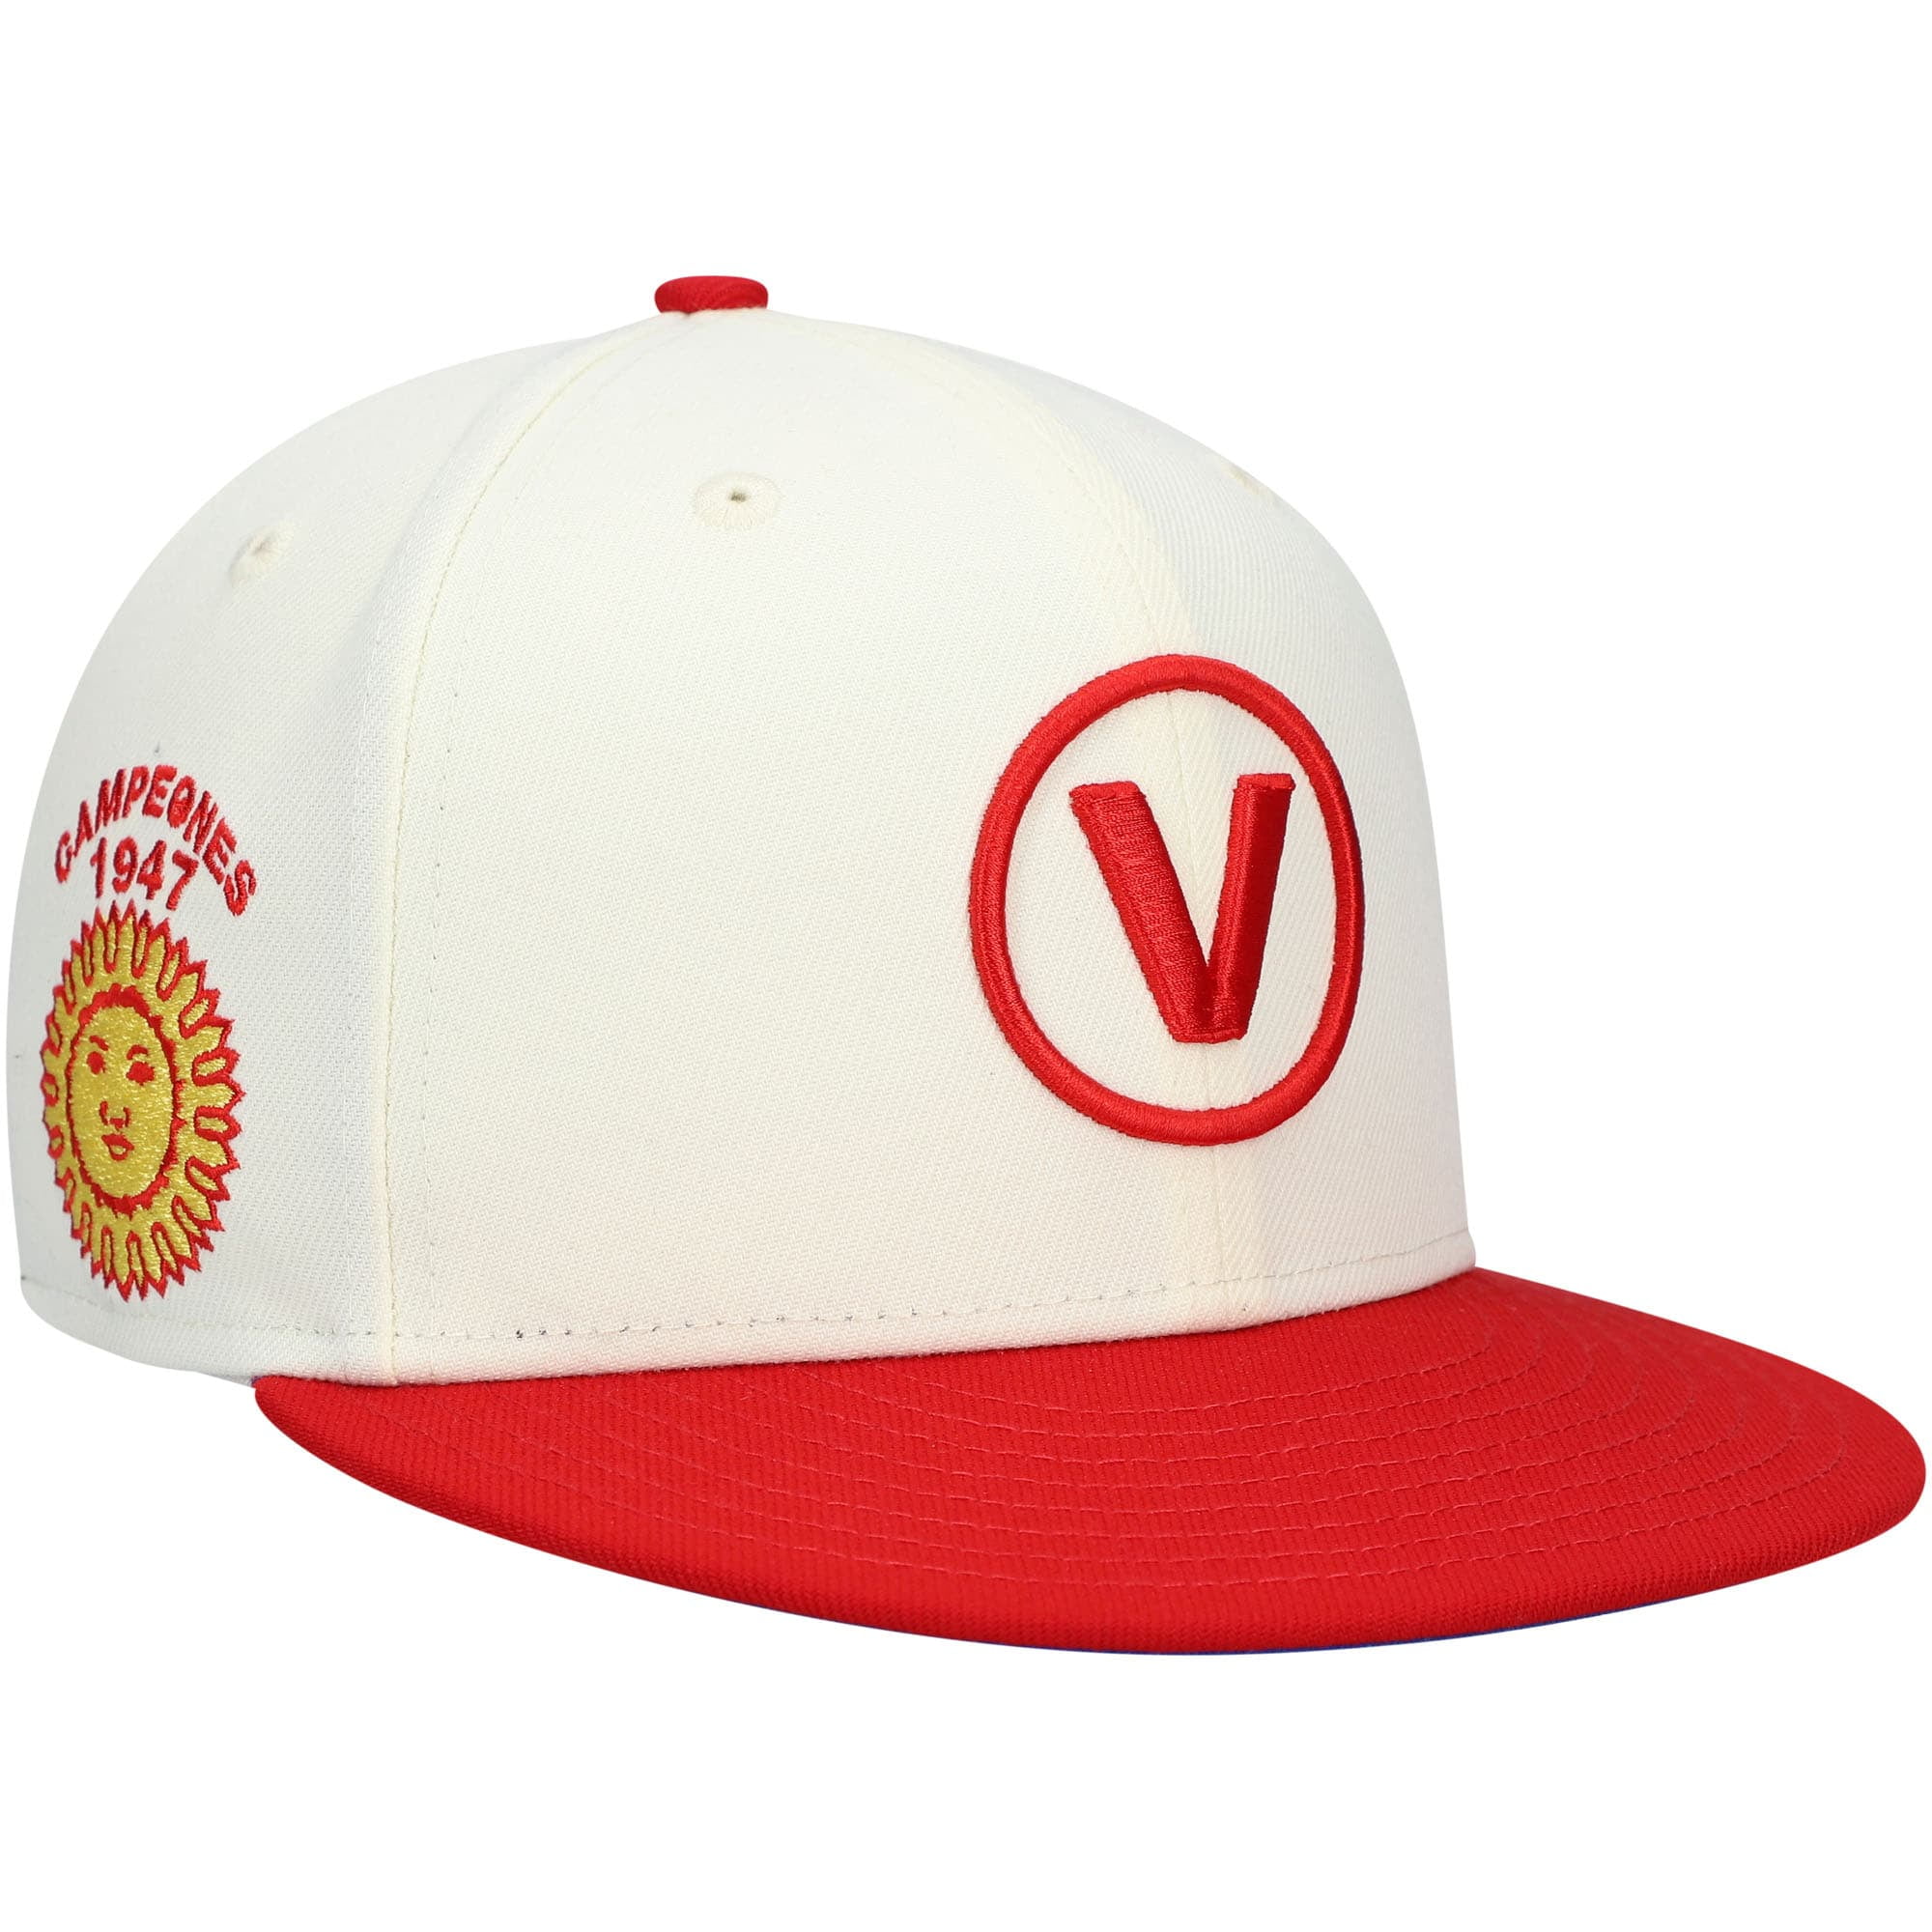 Men\'s Rings & Crwns Cream/Red Vargas Campeones Team Fitted Hat